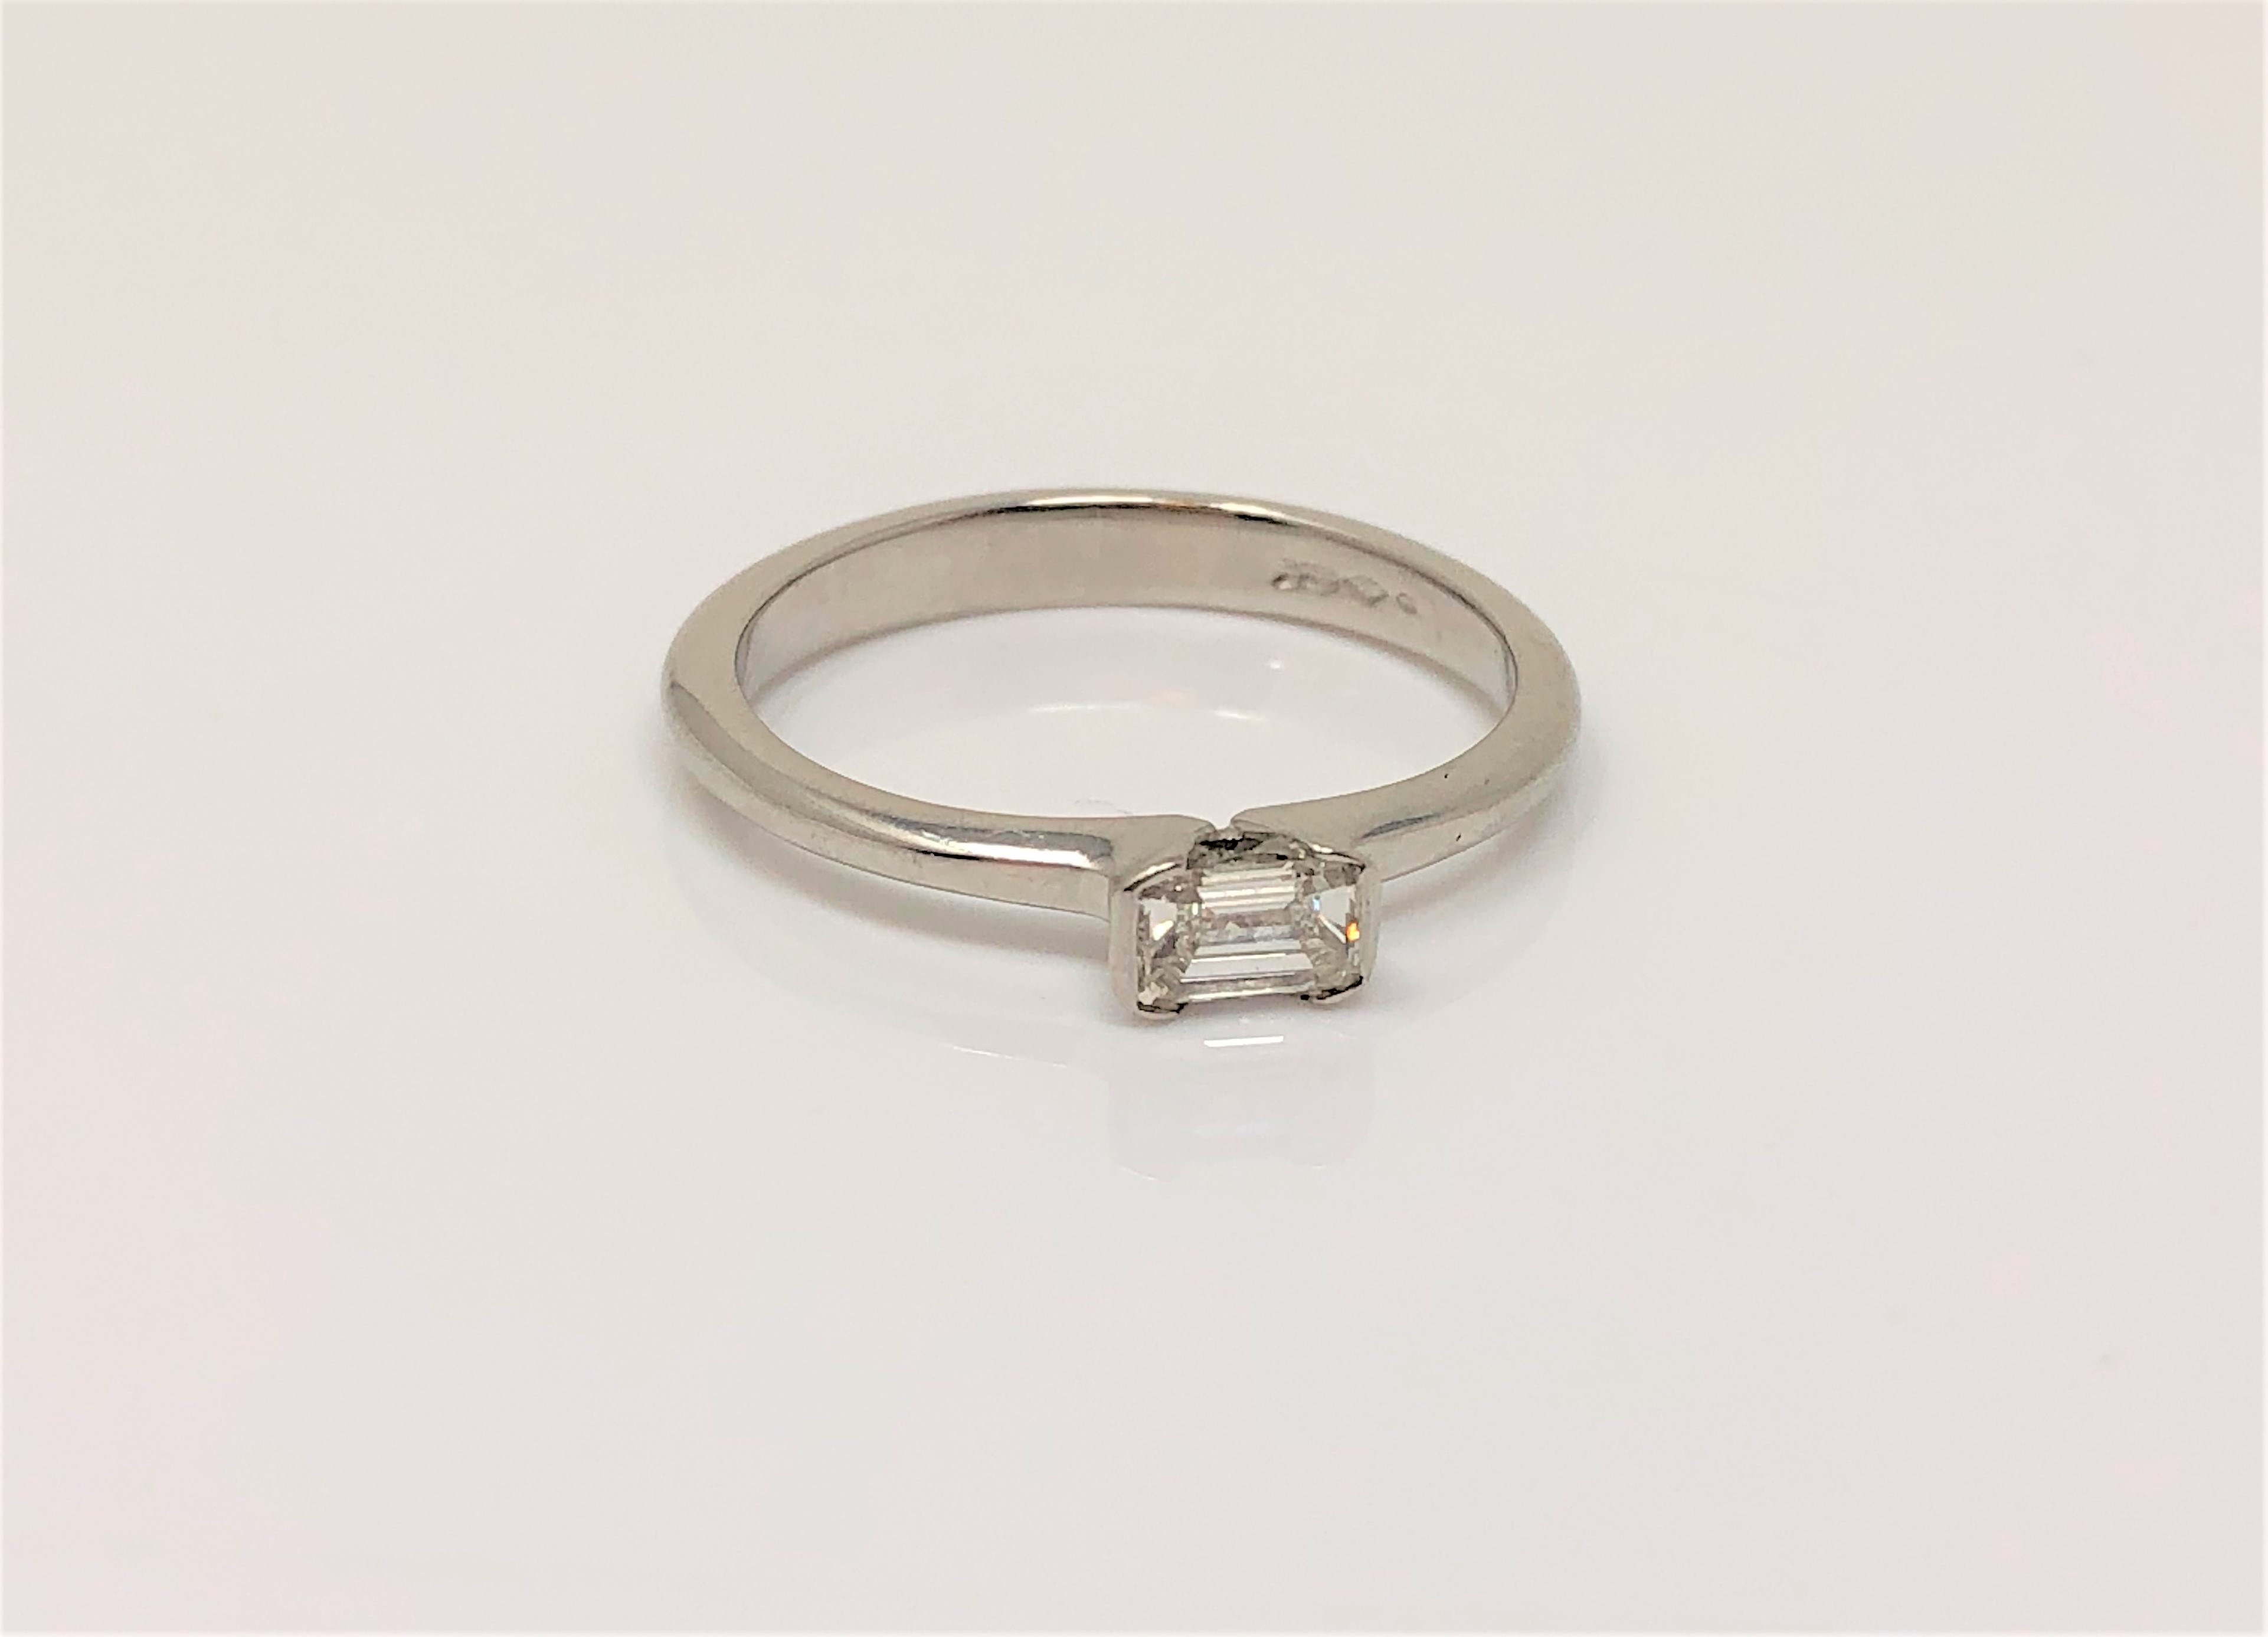 A platinum emerald cut solitaire diamond ring, approx. 0.